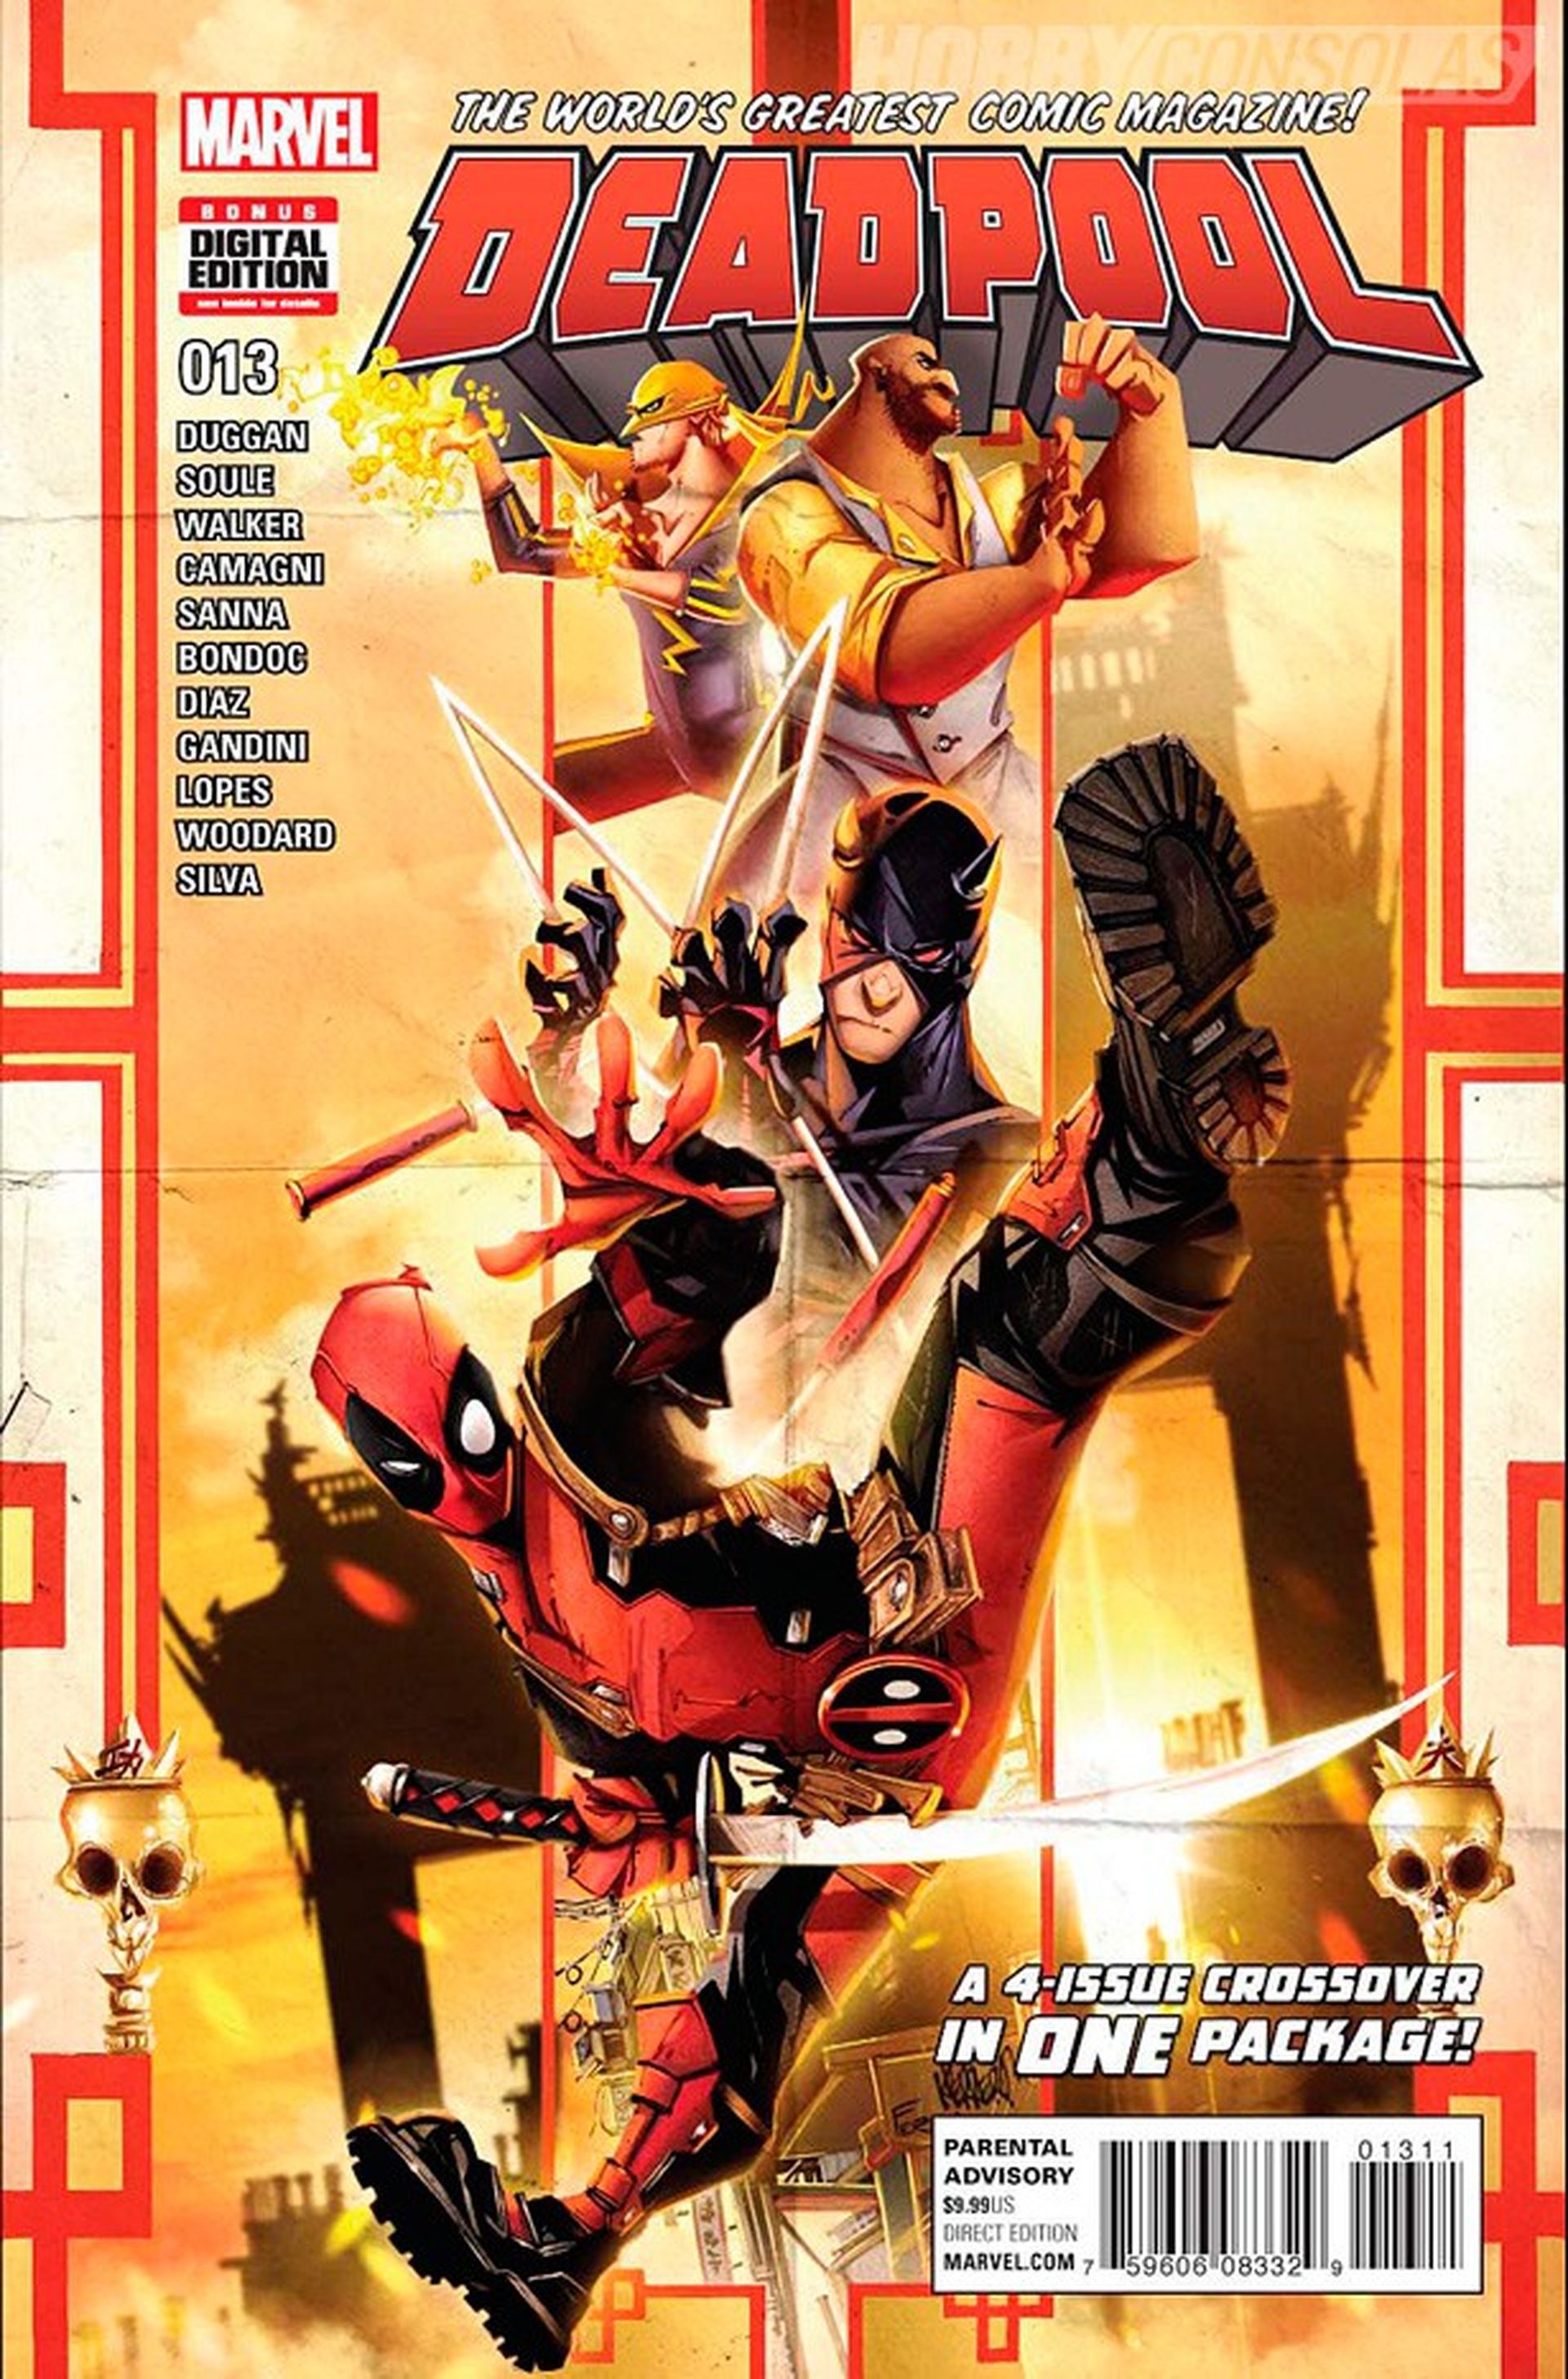 Deadpool #13 avance del cómic